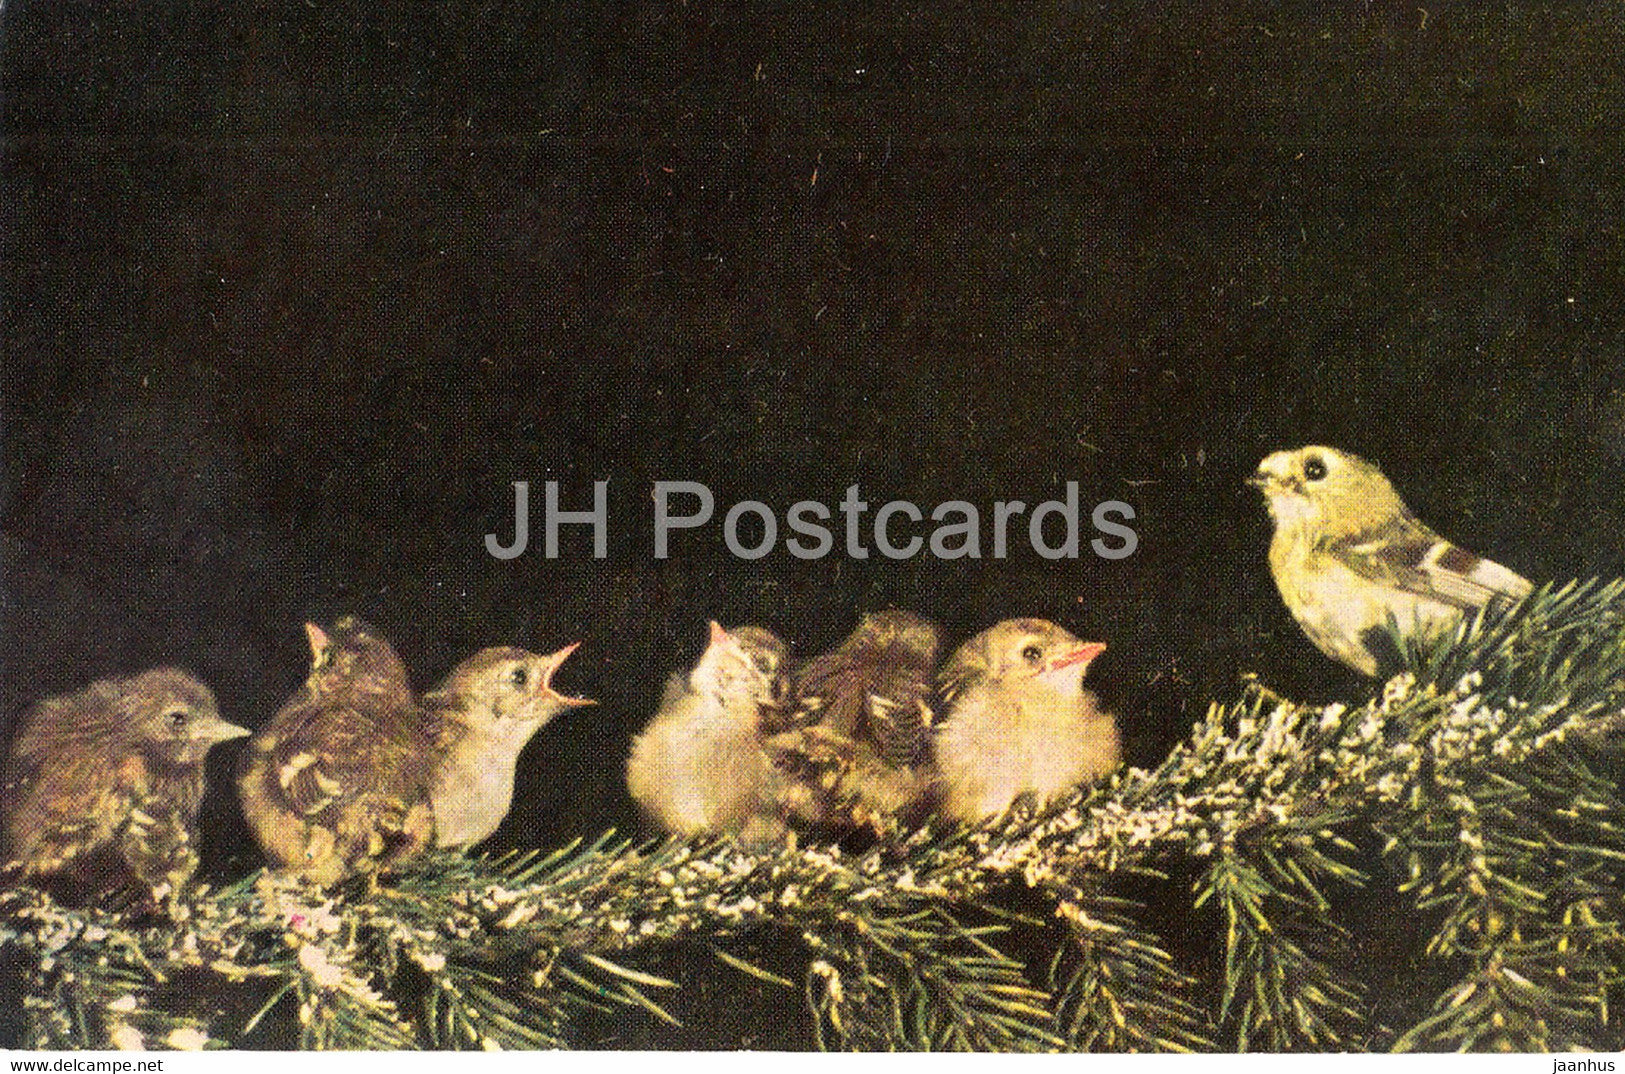 Goldcrest - Regulus regulus - birds - 1968 - Russia USSR - unused - JH Postcards